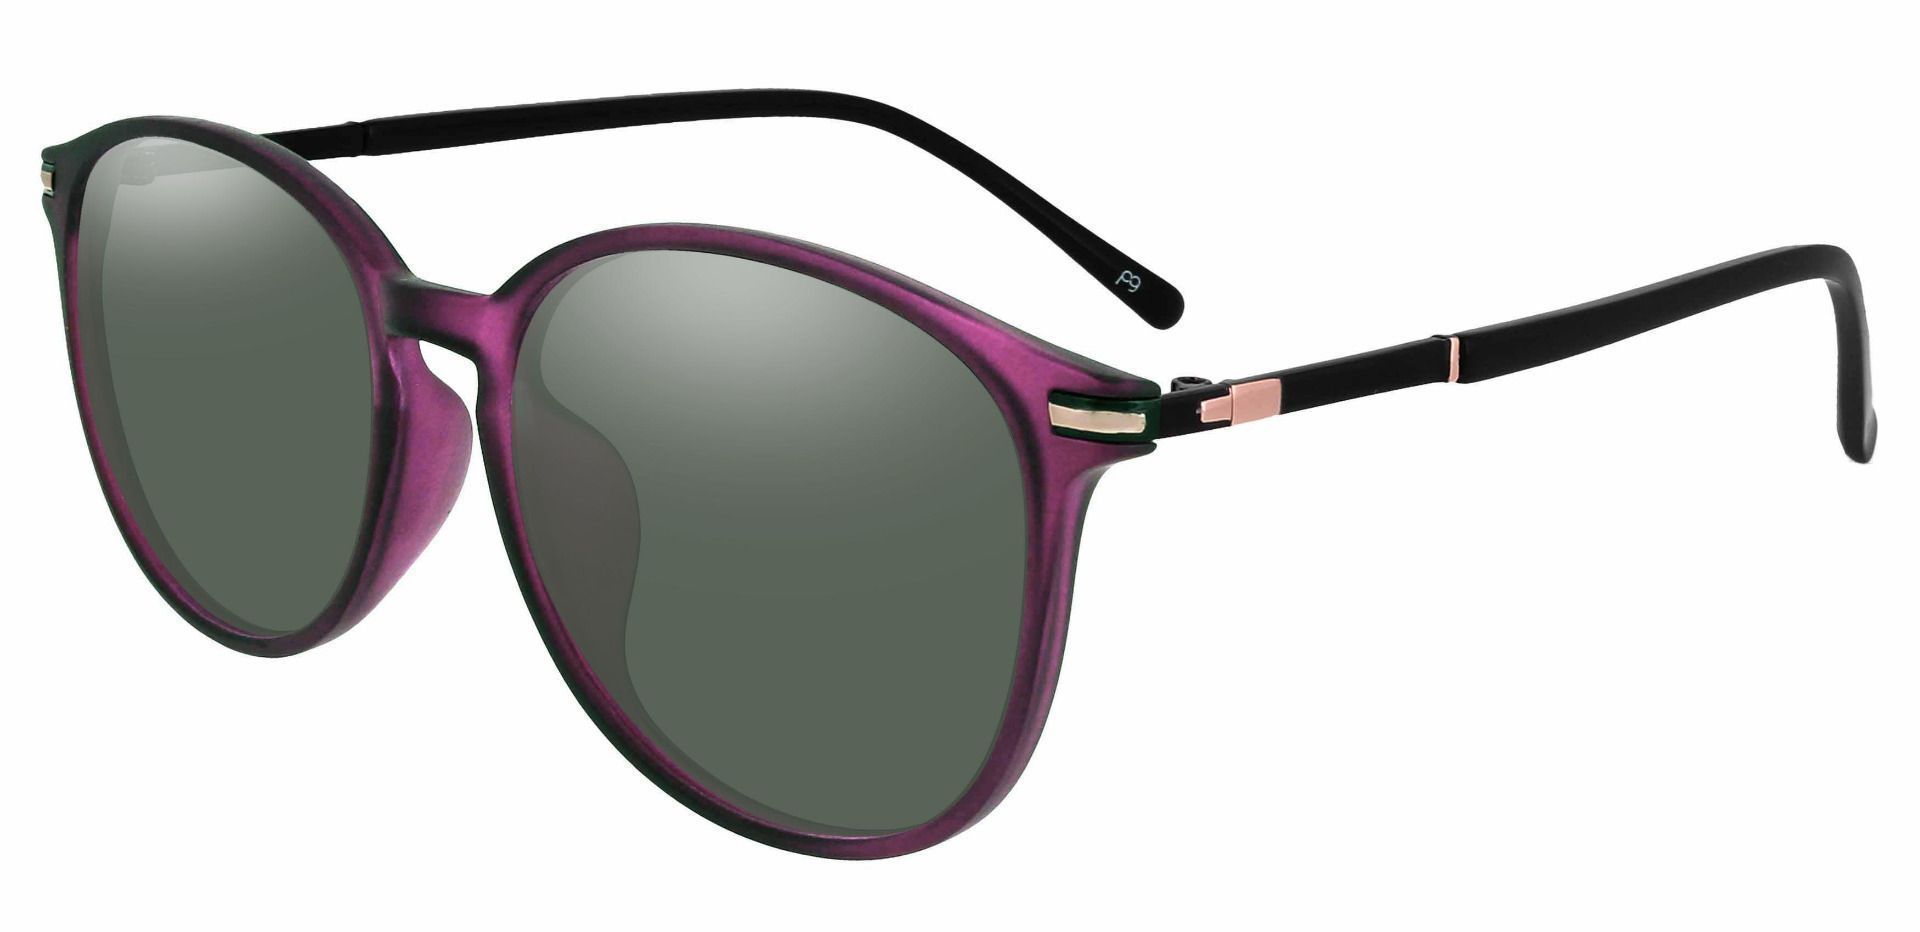 Danbury Oval Progressive Sunglasses - Purple Frame With Green Lenses